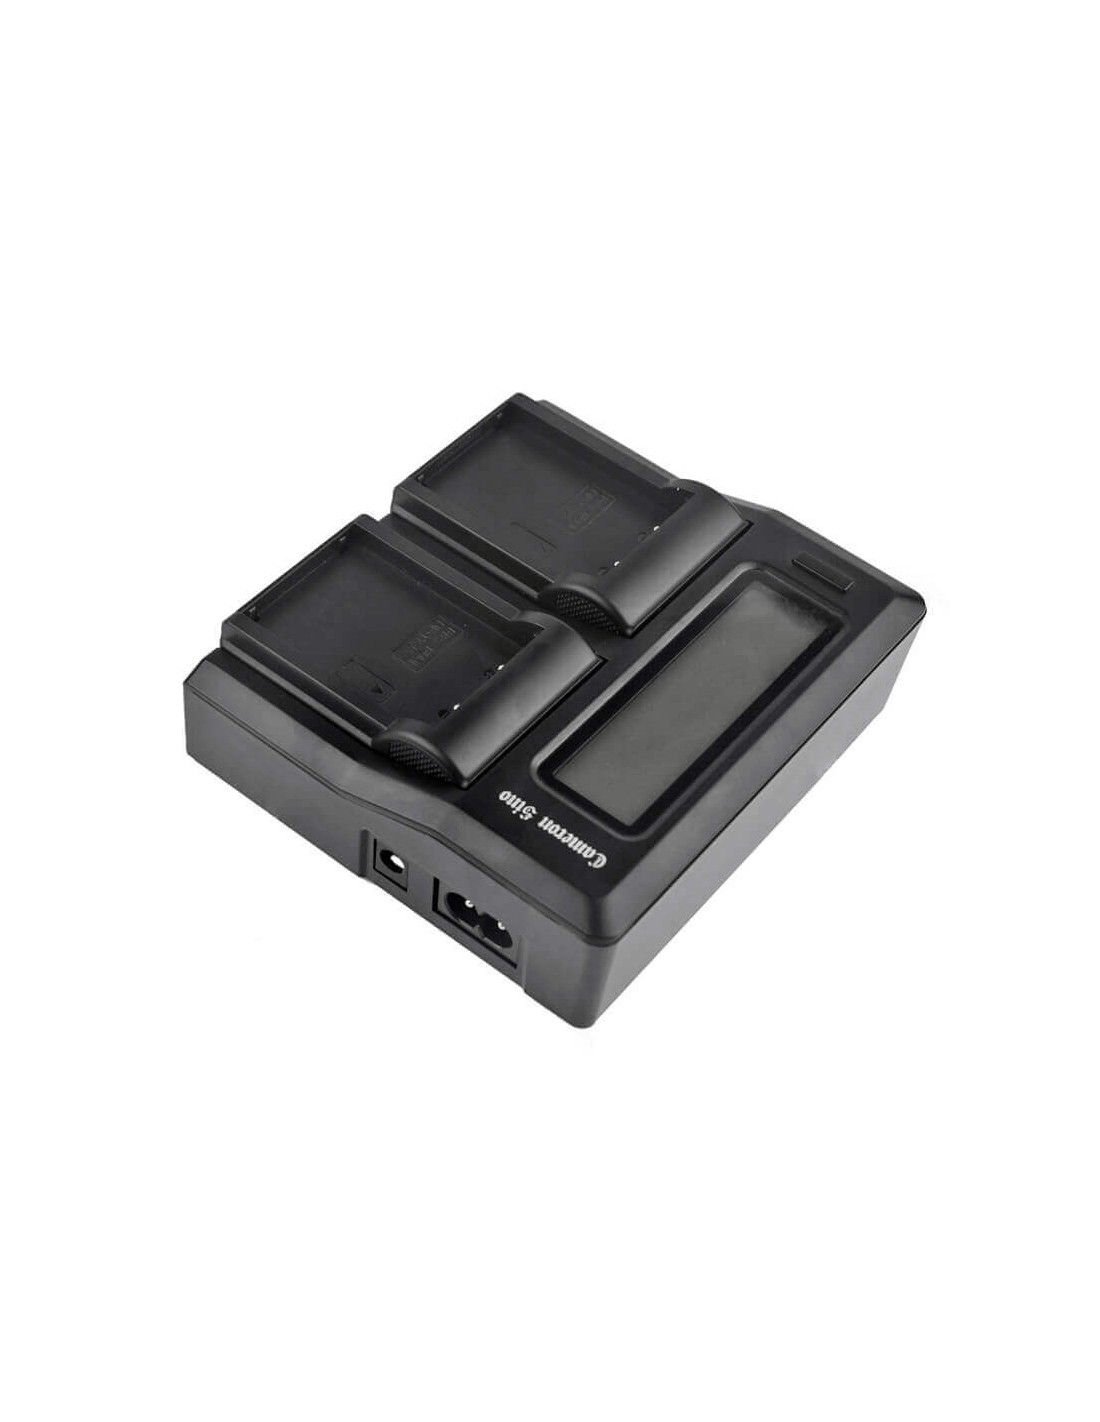 Battery charger for Fujifilm, Gfx 50s, Medium Format Gfx